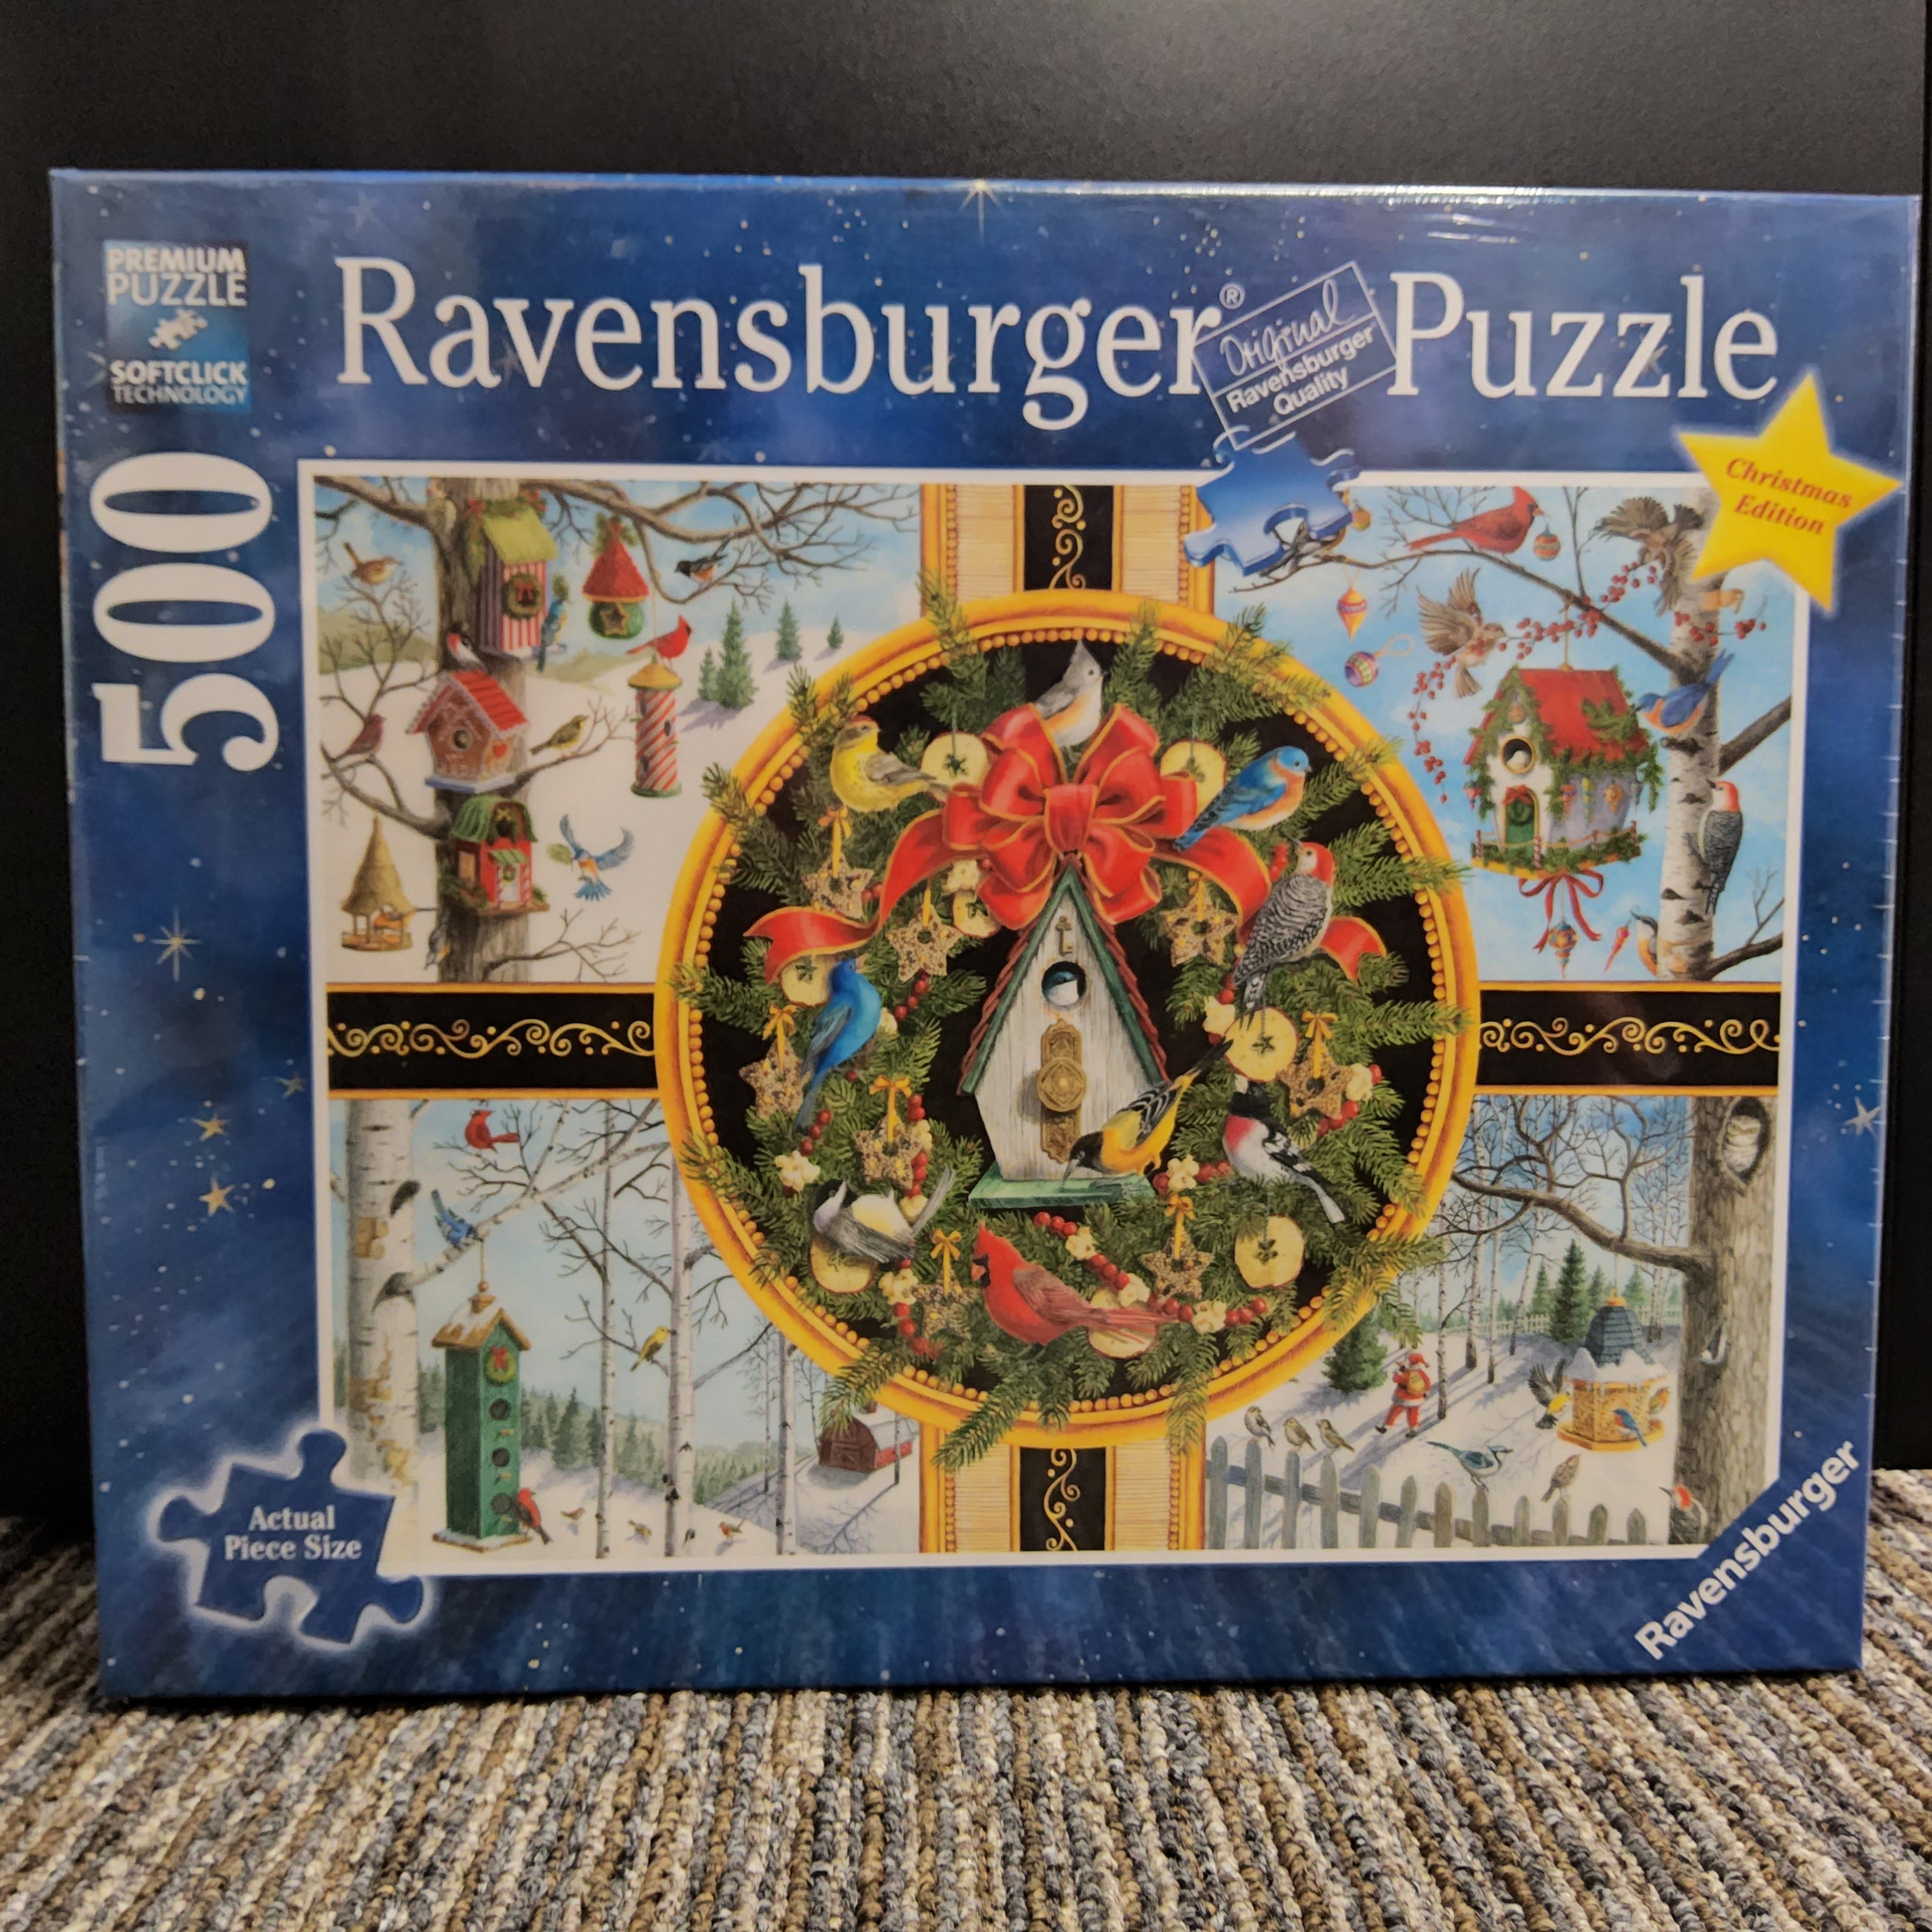 Ravensburger Puzzle - Christmas Songbirds - 500 pieces - #16835